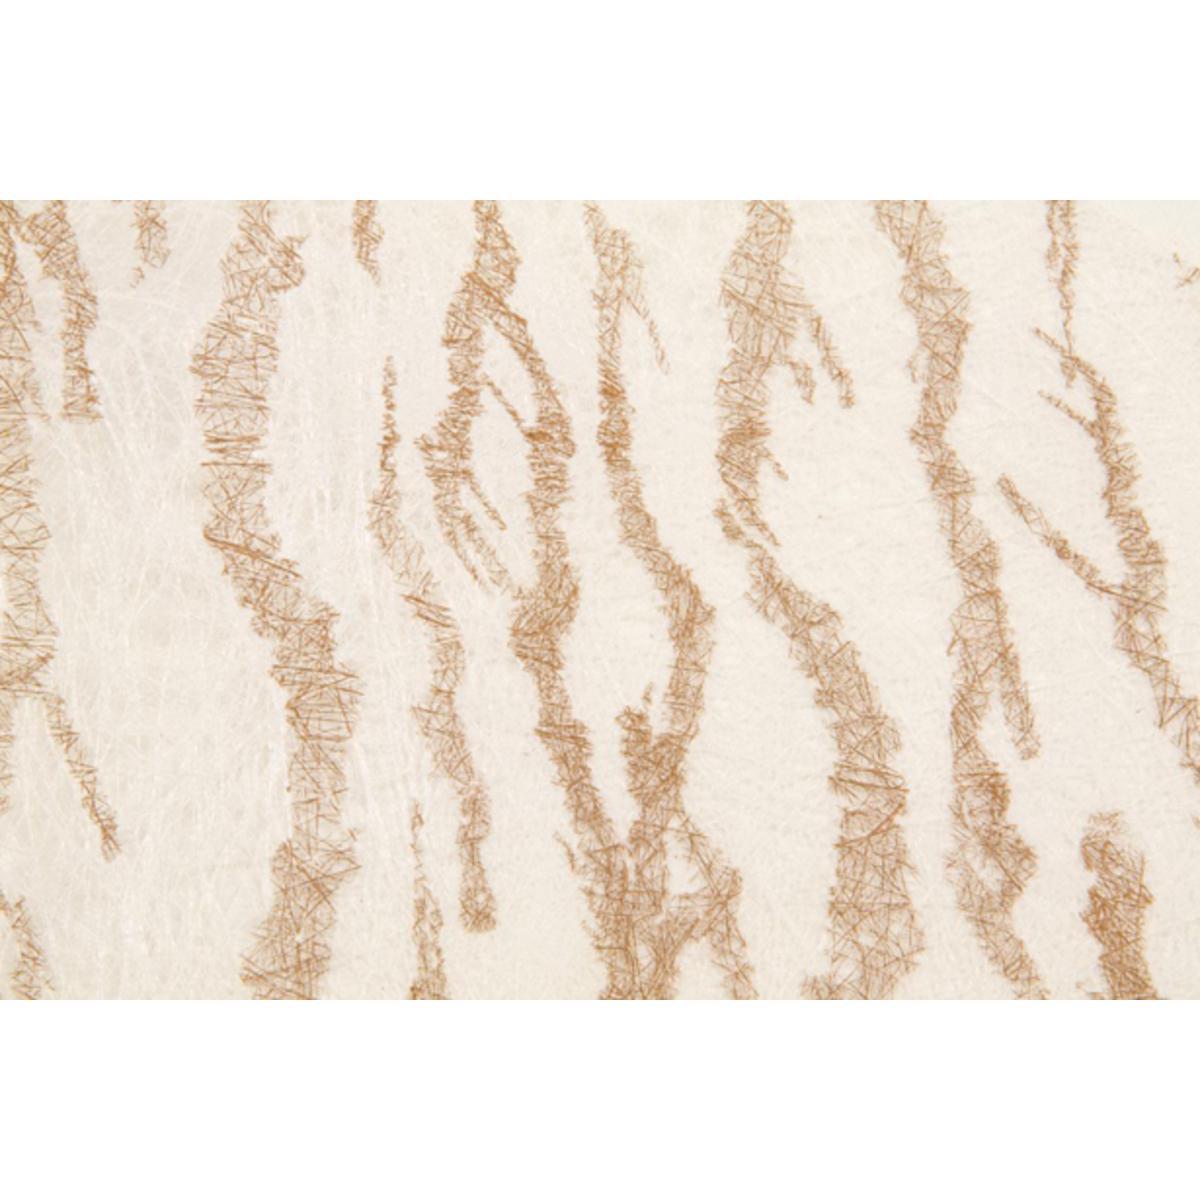 Chemin de table intissé motif savane - 29 cm x 5 m - Polyester - Marron